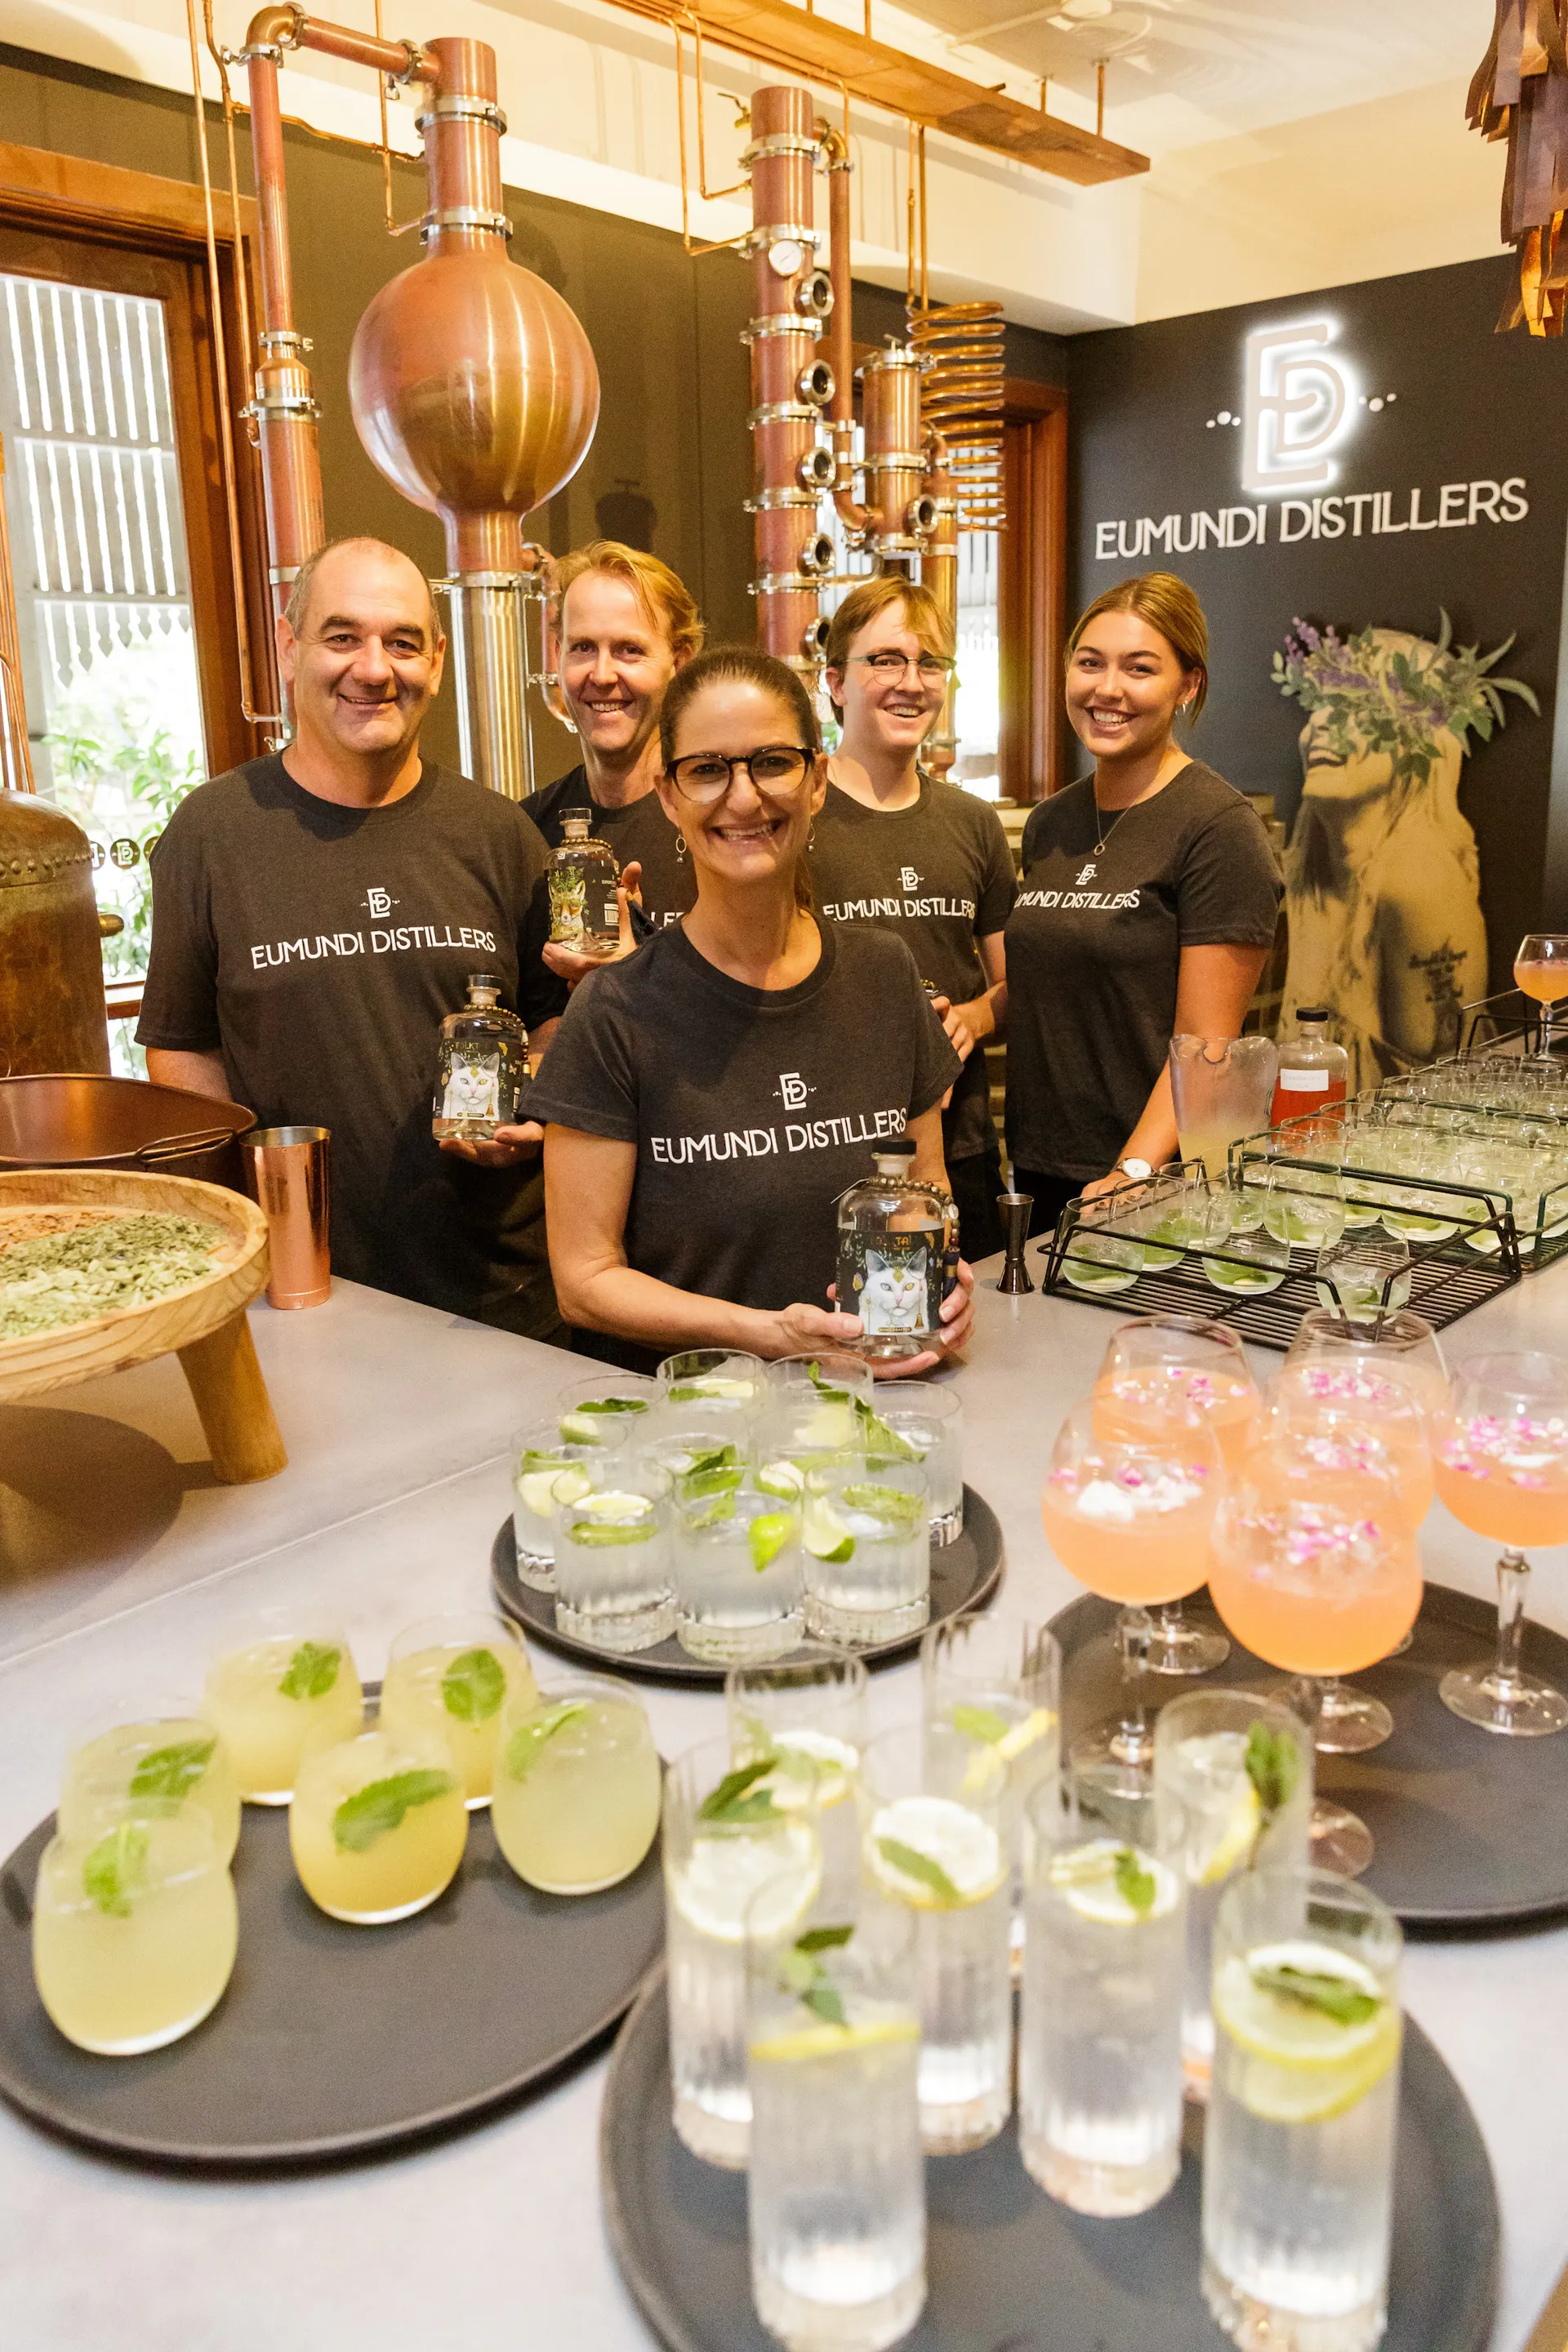 Eumundi Distillers @ The Imperial Hotel - serving up Folktale Gin